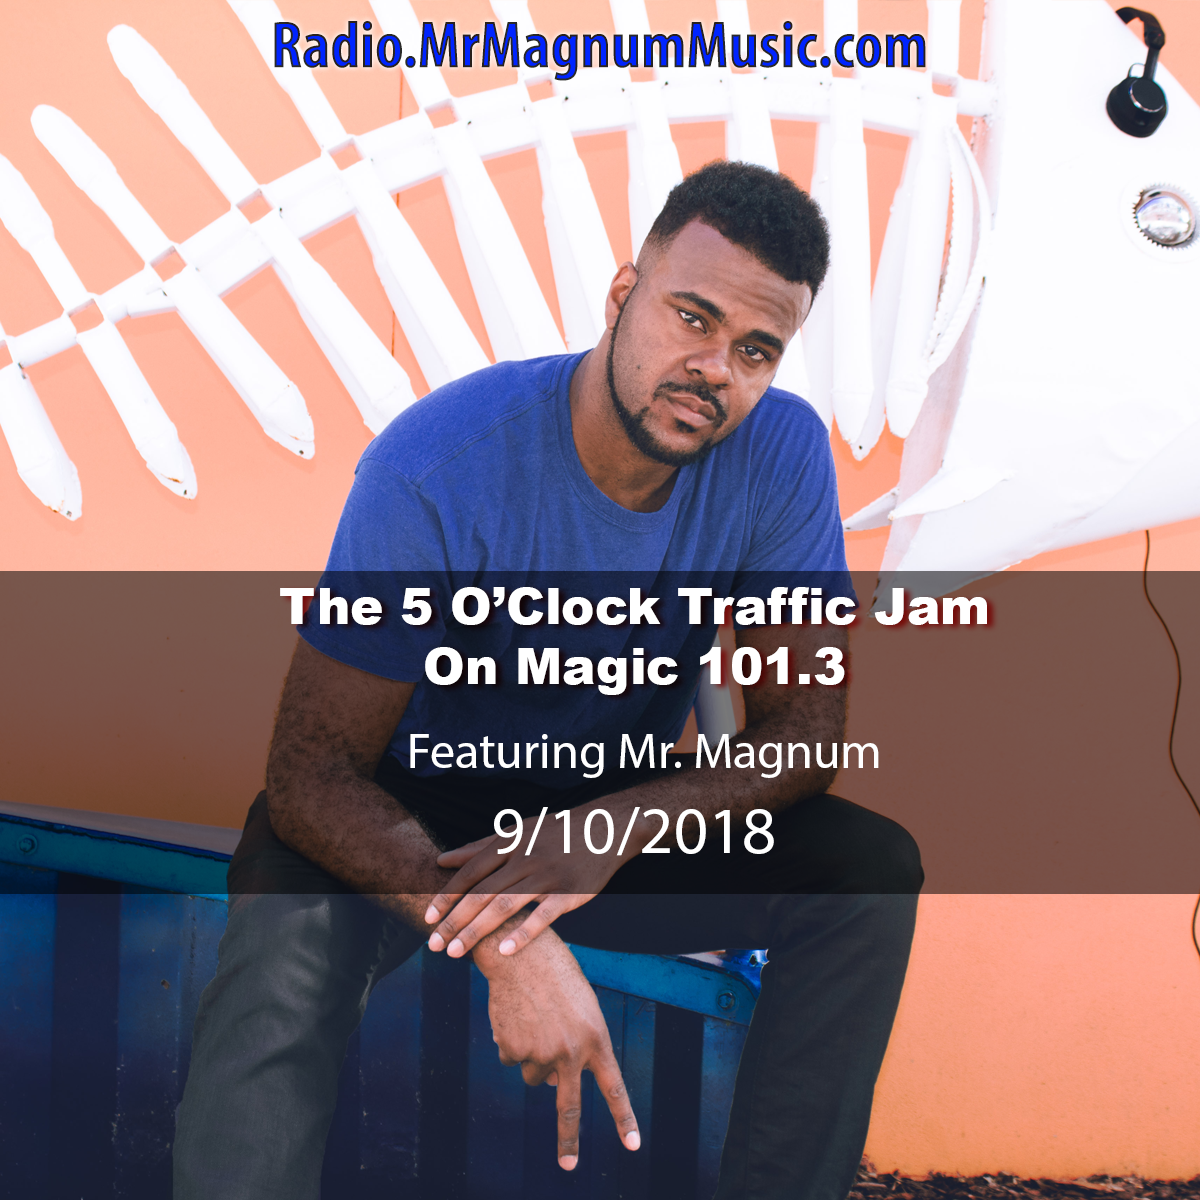 The 5 O'Clock Traffic Jam 20180910 featuring Gainesville's #1 DJ, Mr. Magnum on Magic 101.3